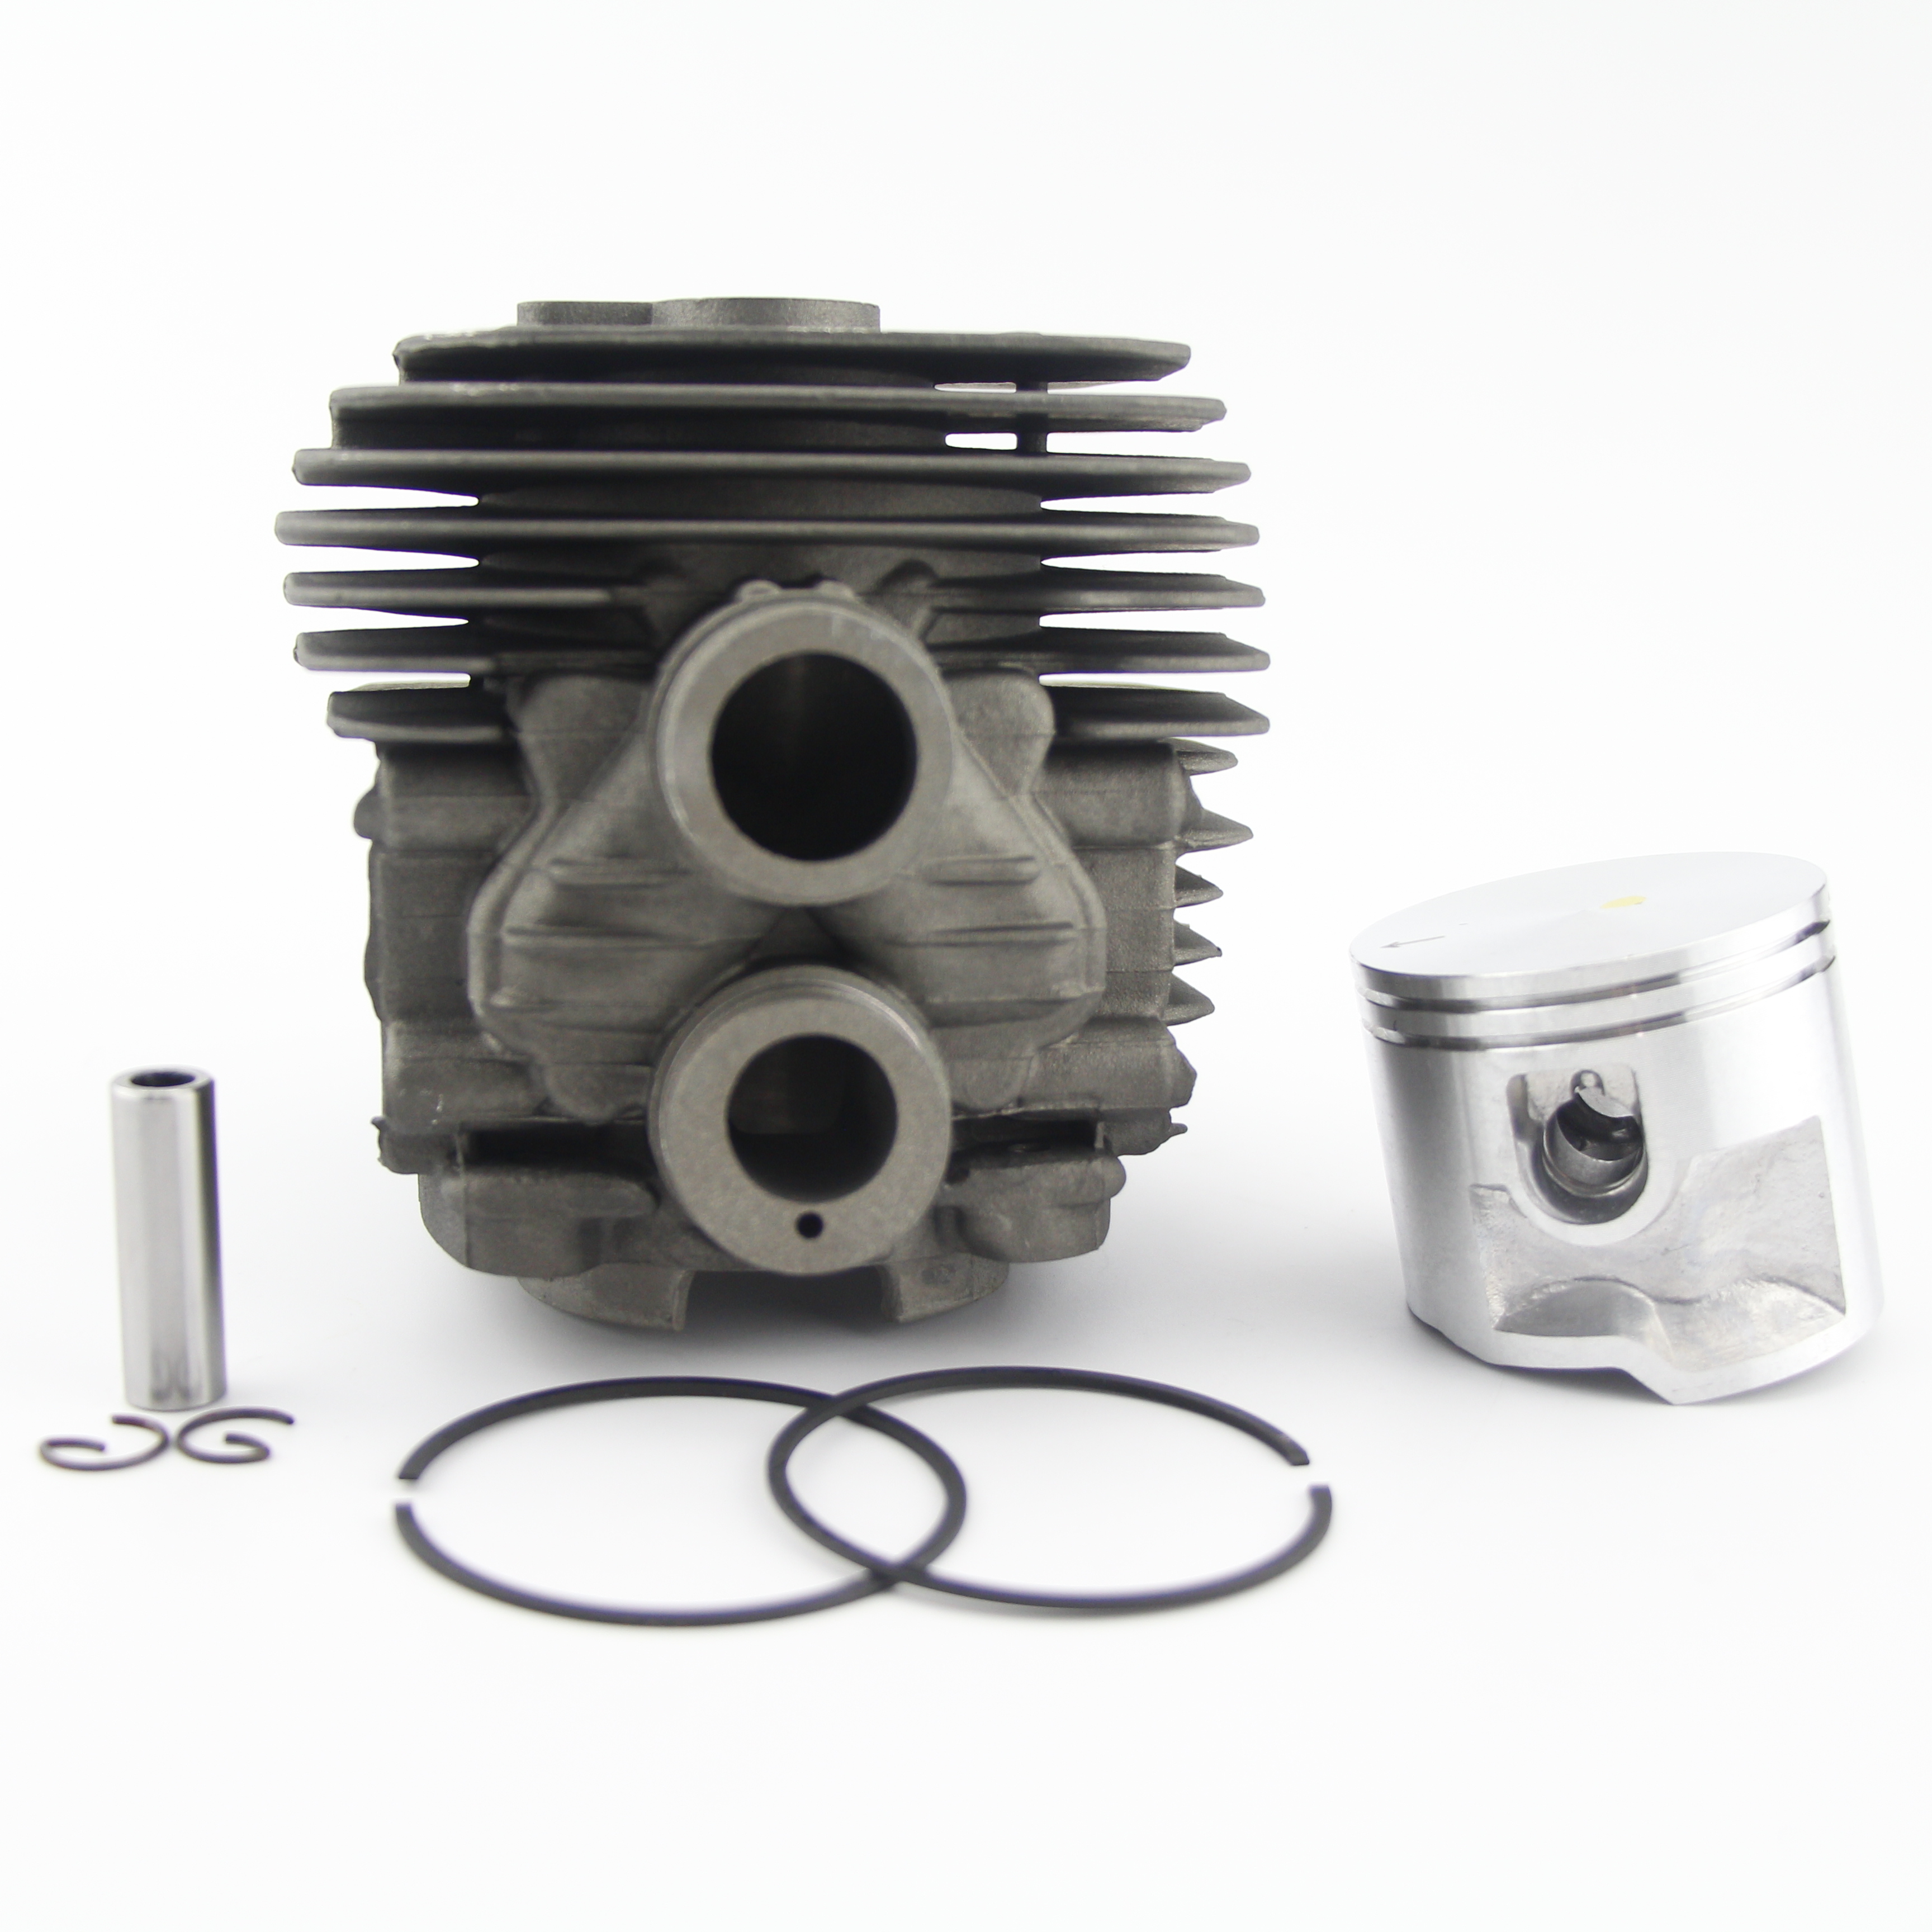 Cylinder Piston Kit 50mm For STIHL TS410 TS420 Cutoff # 4238-020-1202 New 